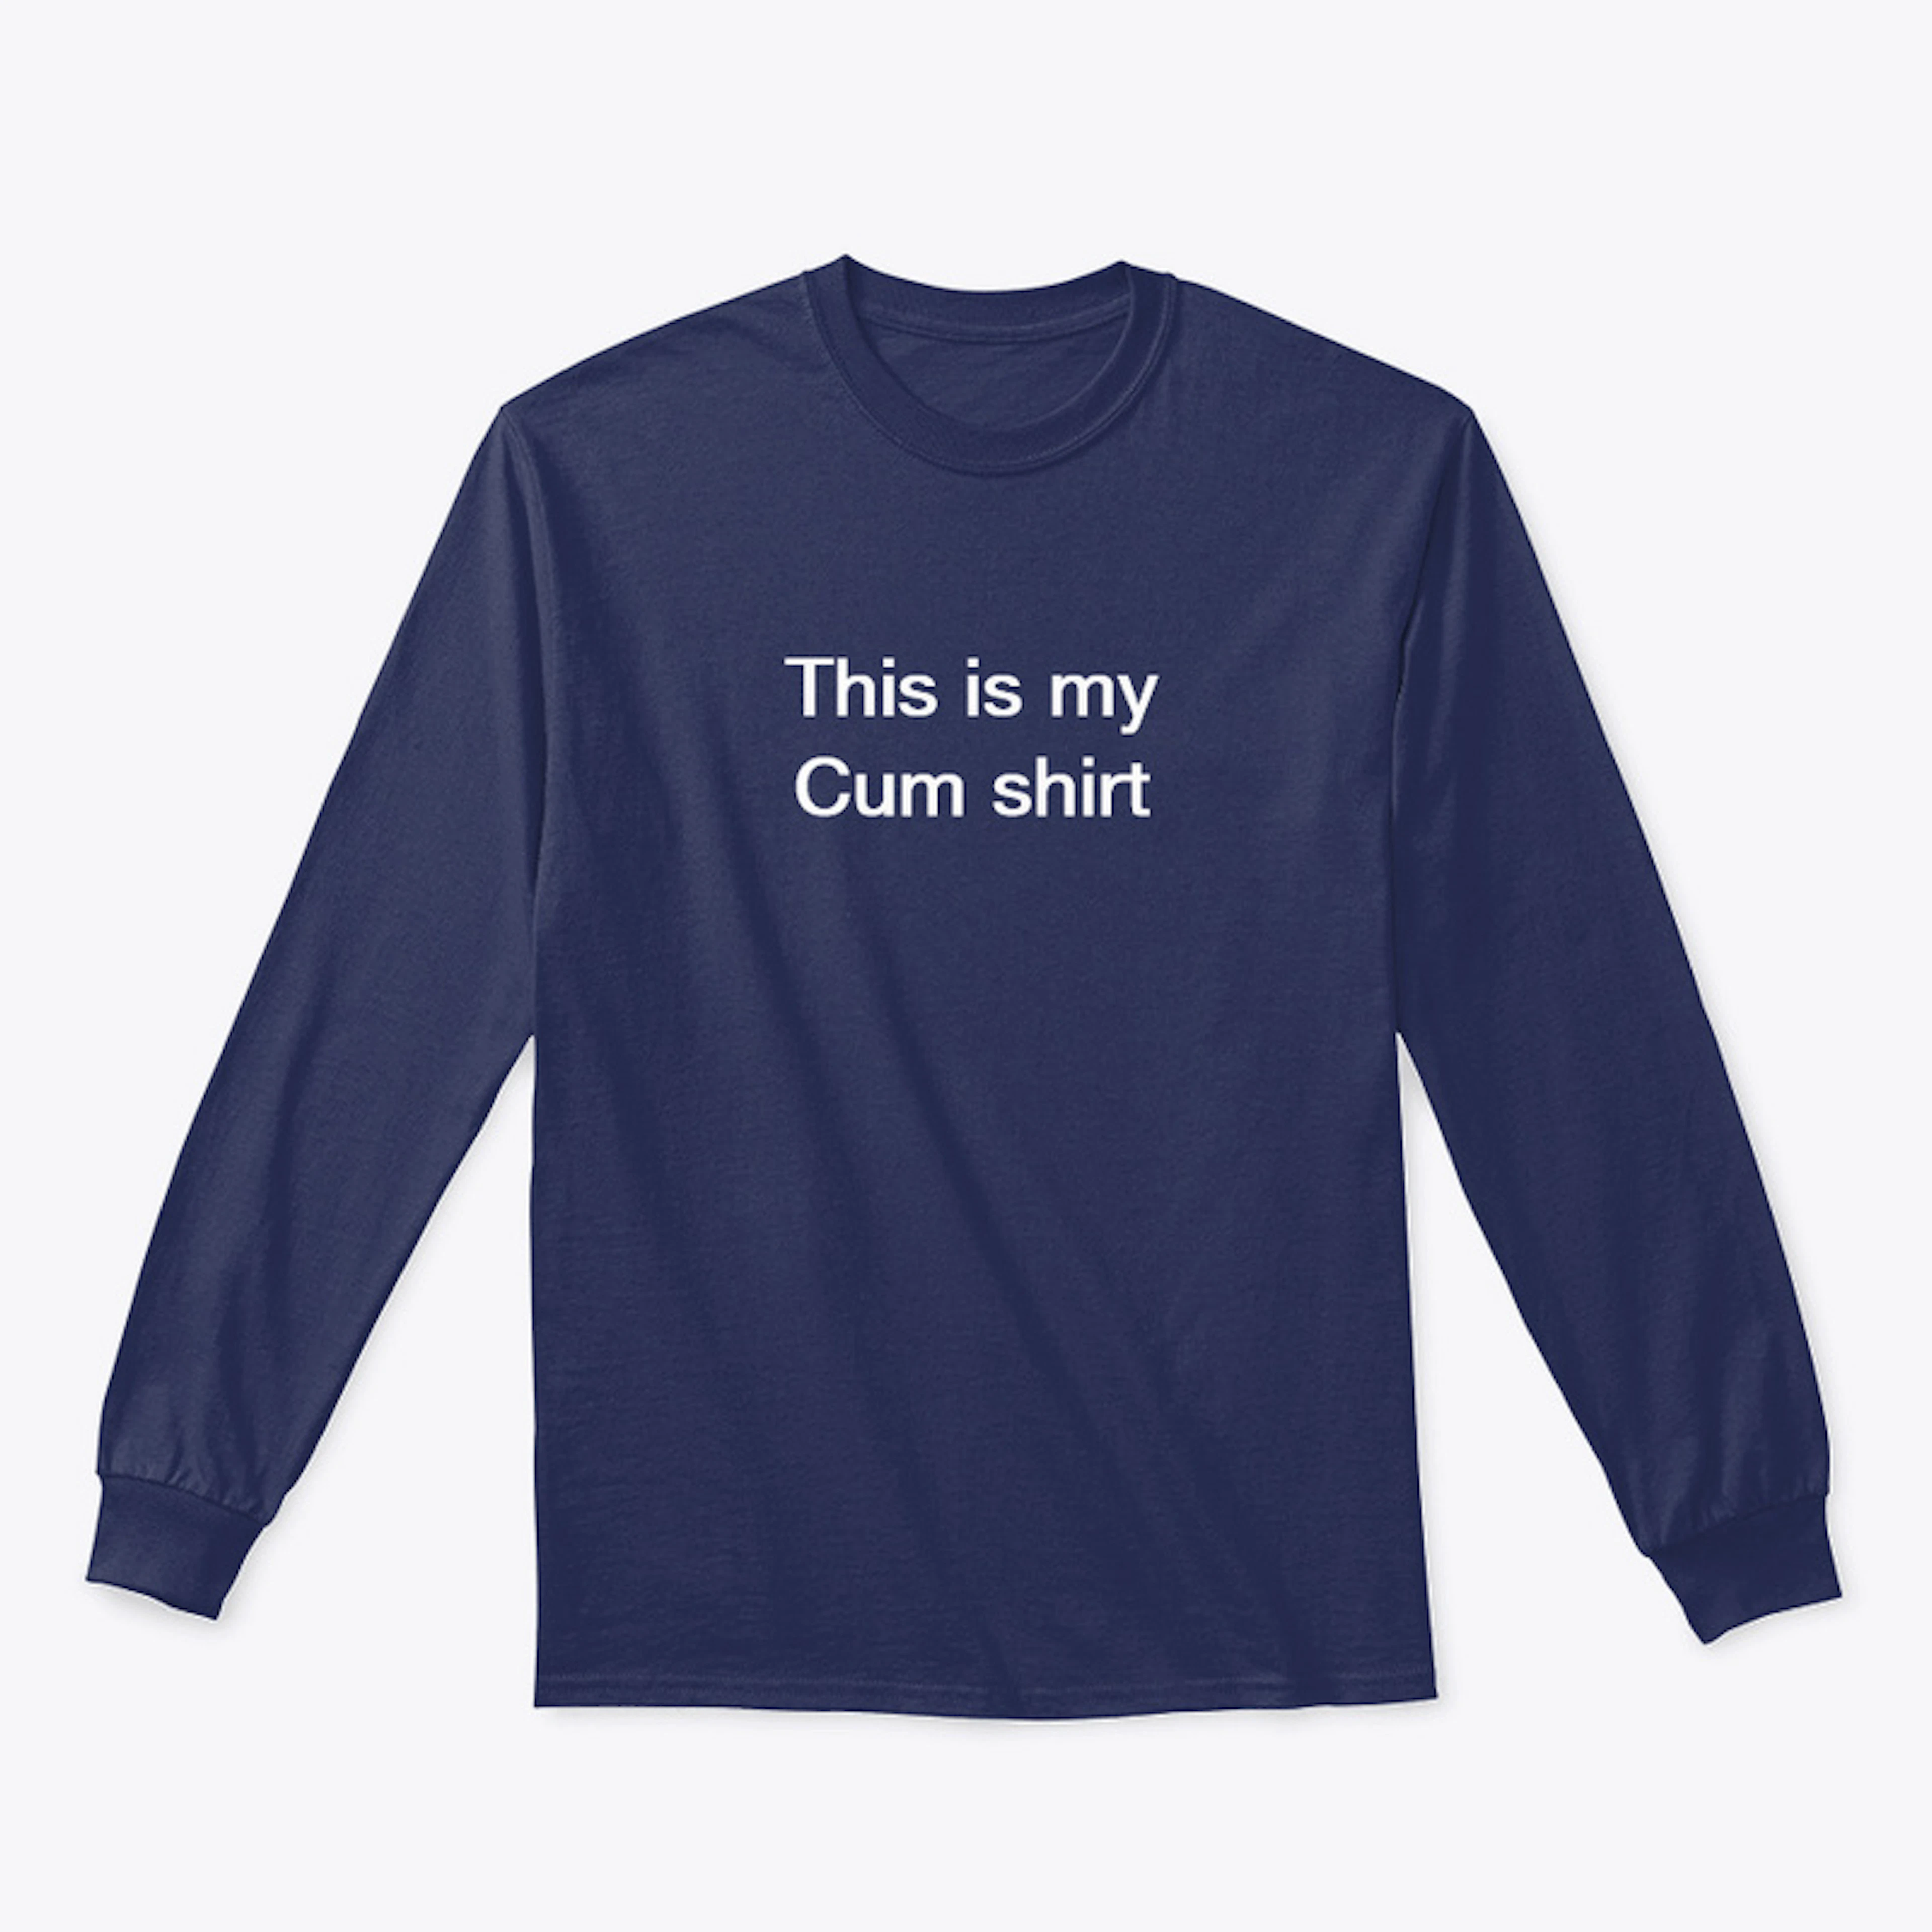 This is my cum shirt